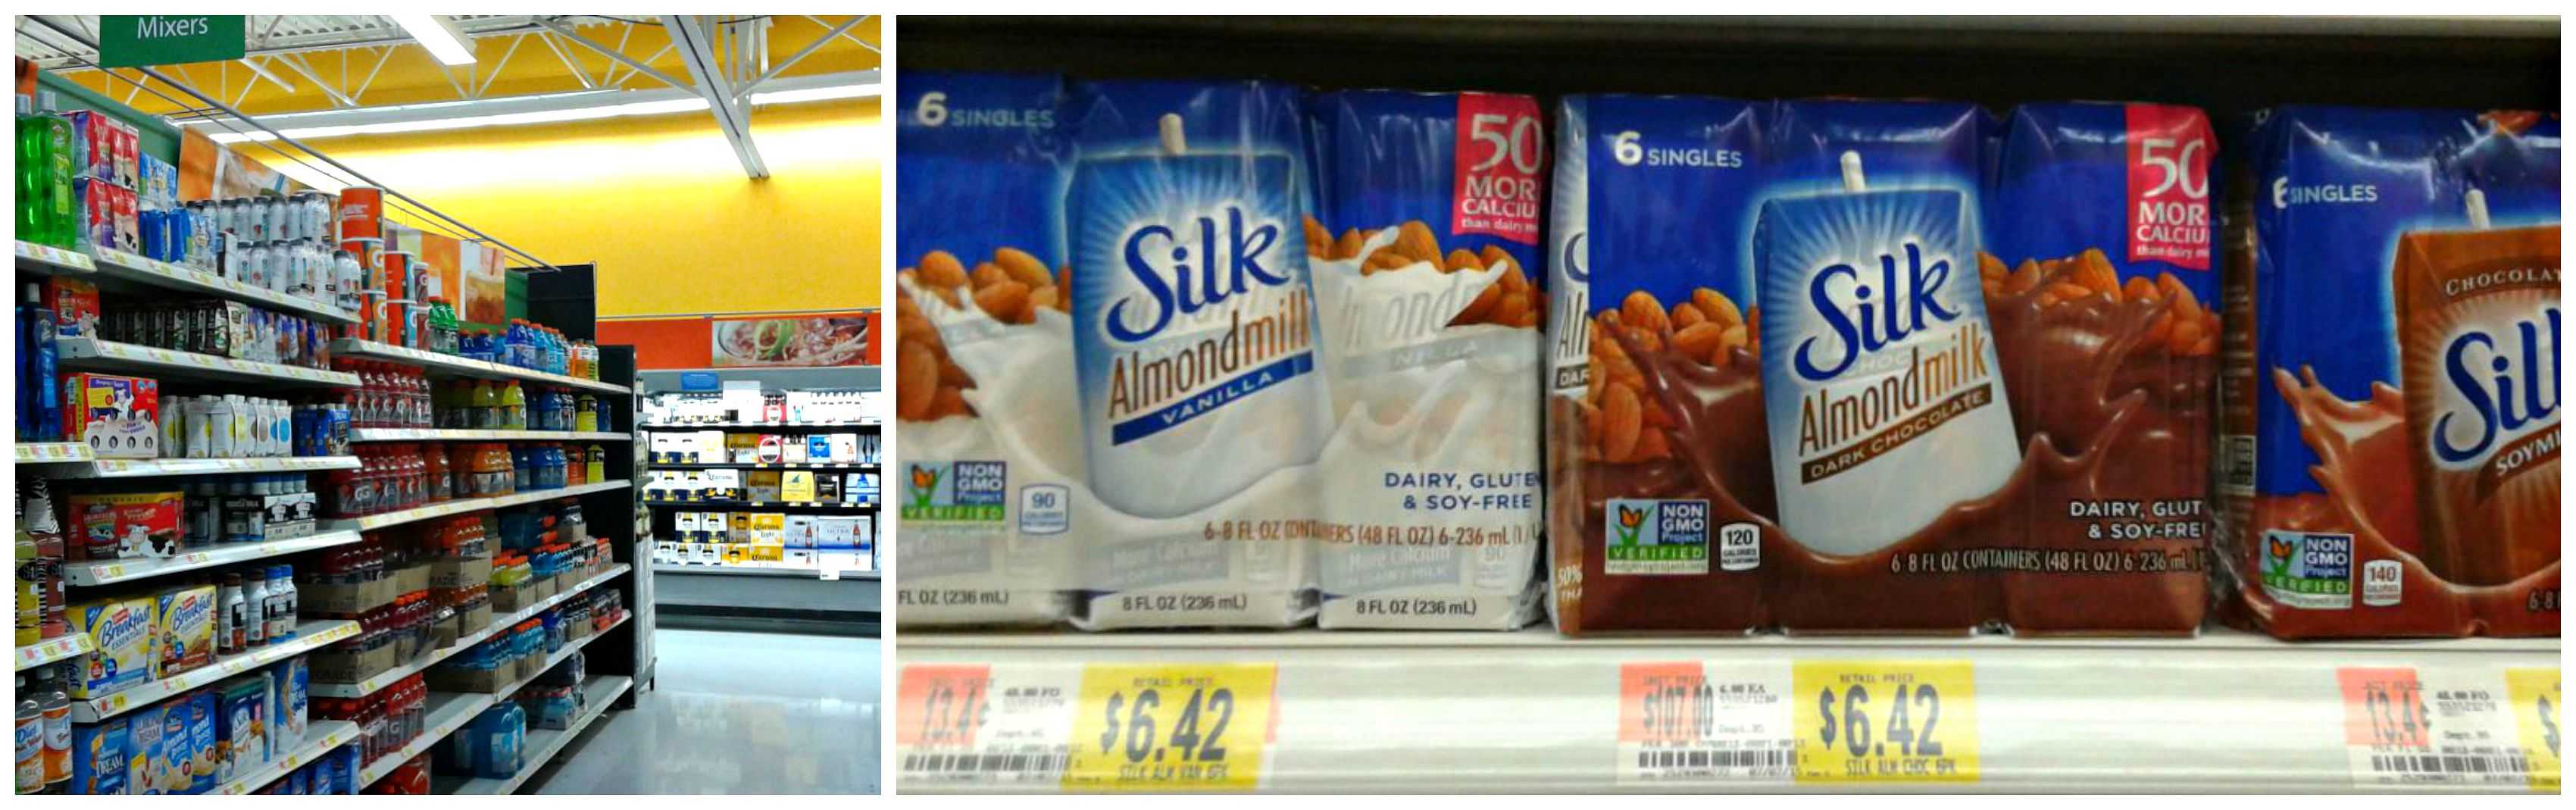 Silk 6pack Walmart